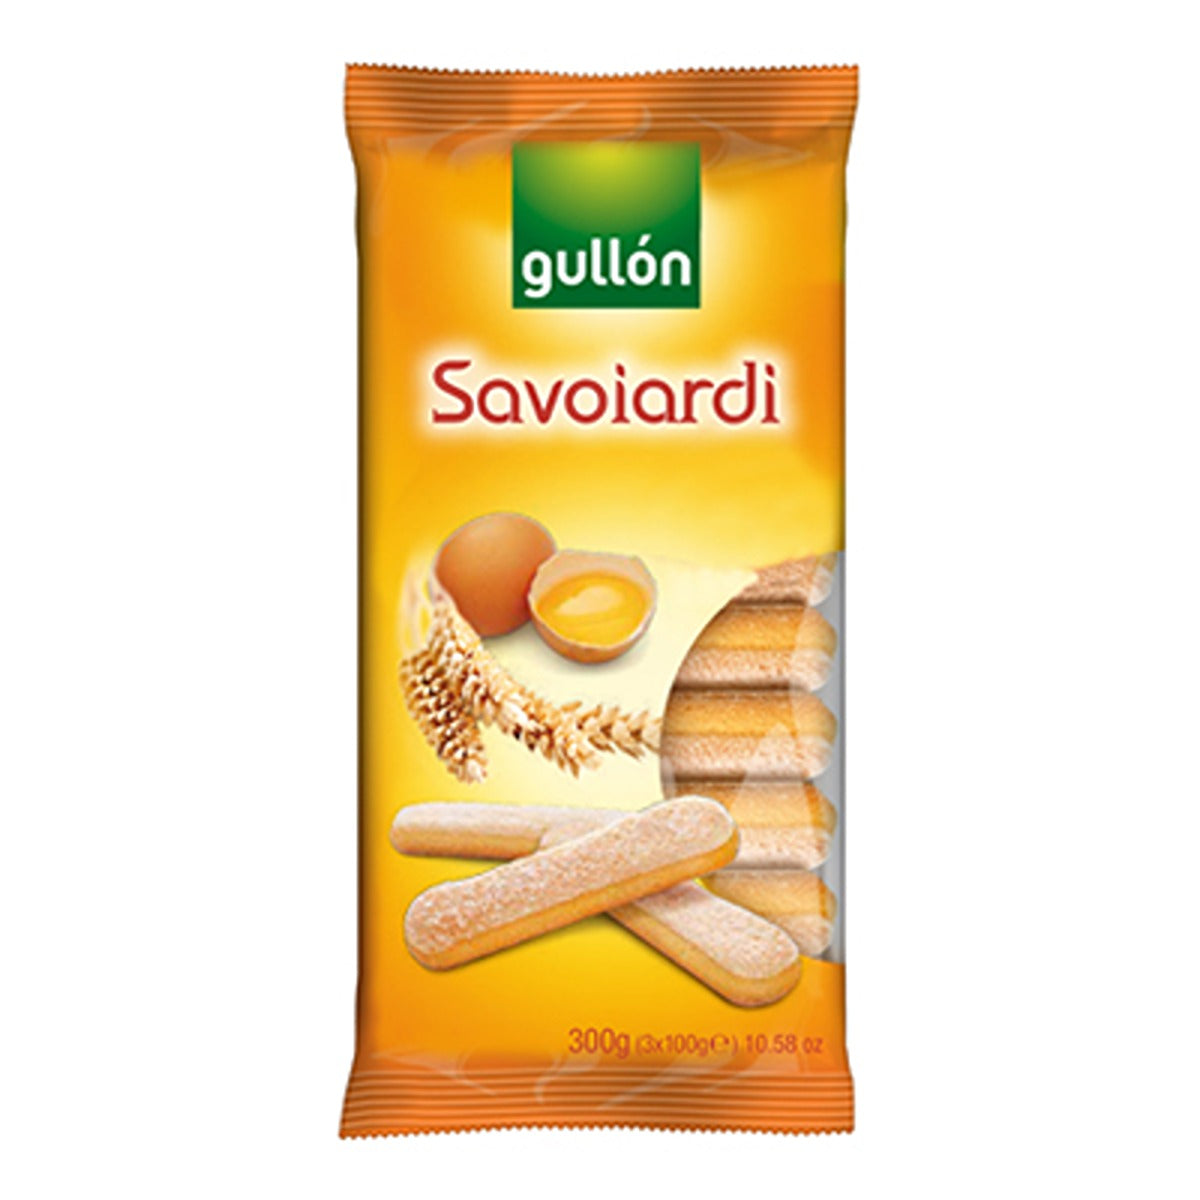 Gullon - Savoiardi Lady Fingers - 300g - Continental Food Store